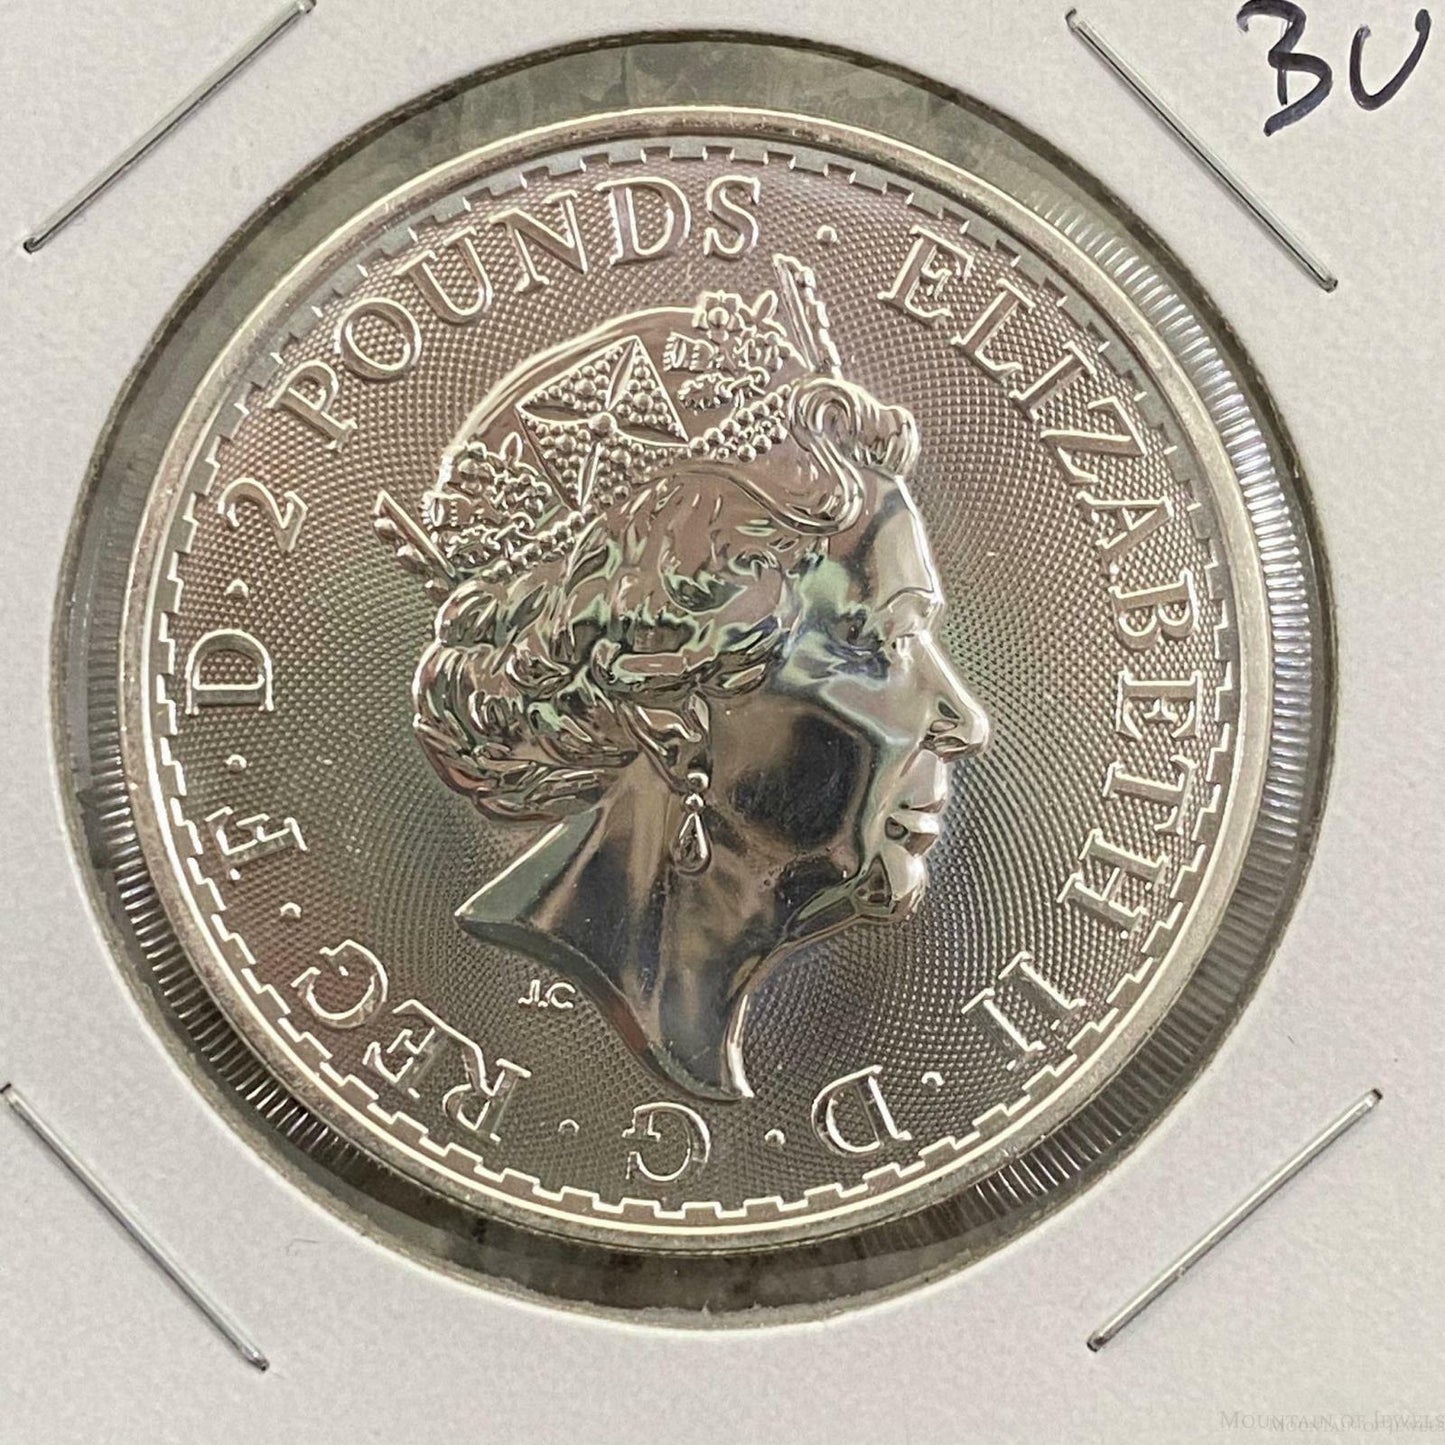 2021 UK 1.0 Ounce Britania 2 Pounds .999 Fine Silver BU #13122-8